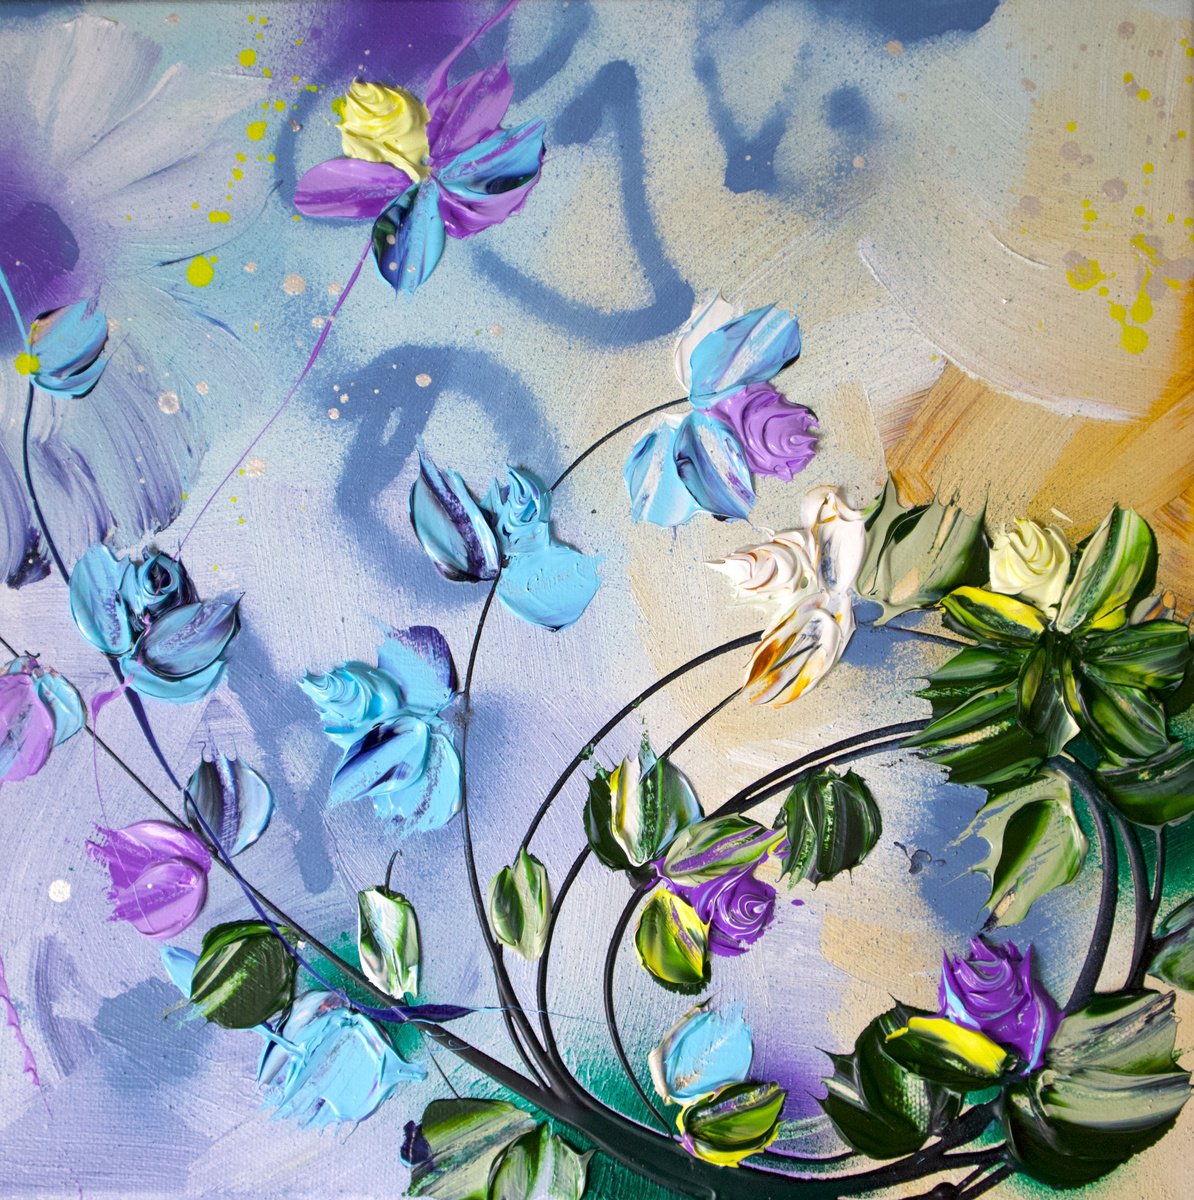 Little Blooms #6 by Anastassia Skopp